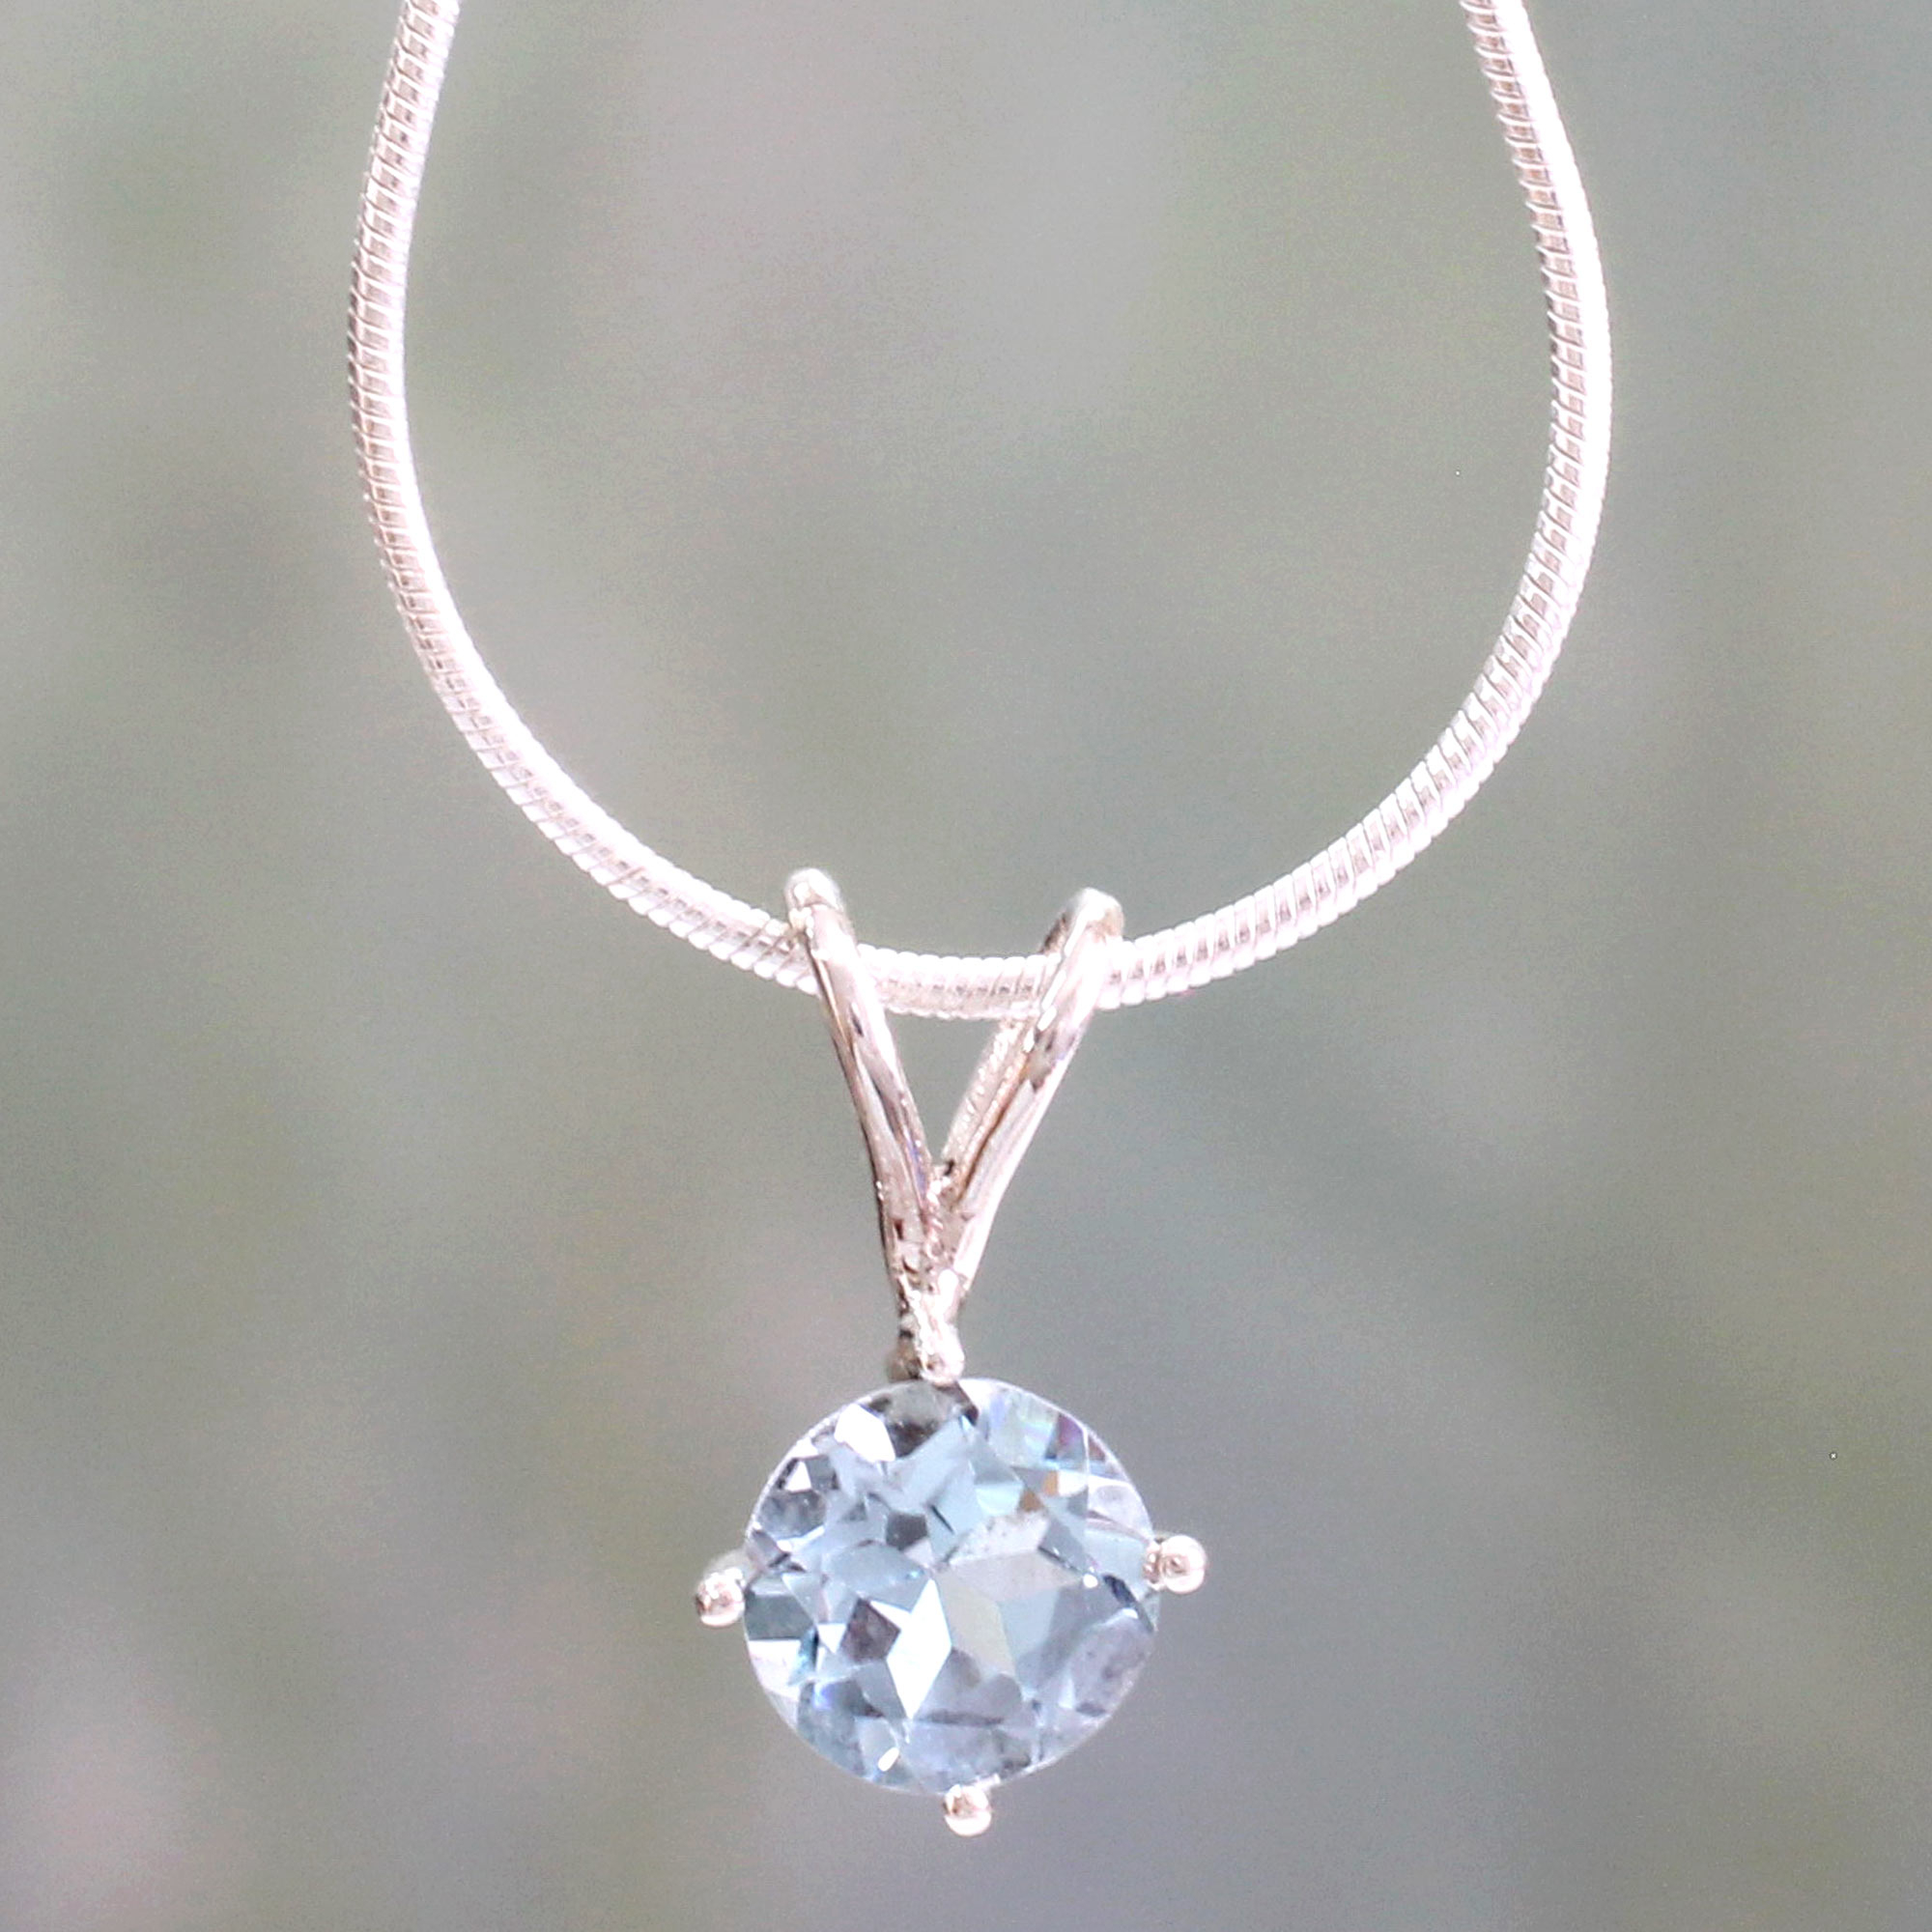 UNICEF Market | Unique Silver Necklace with Blue Topaz Gemstone Pendant ...